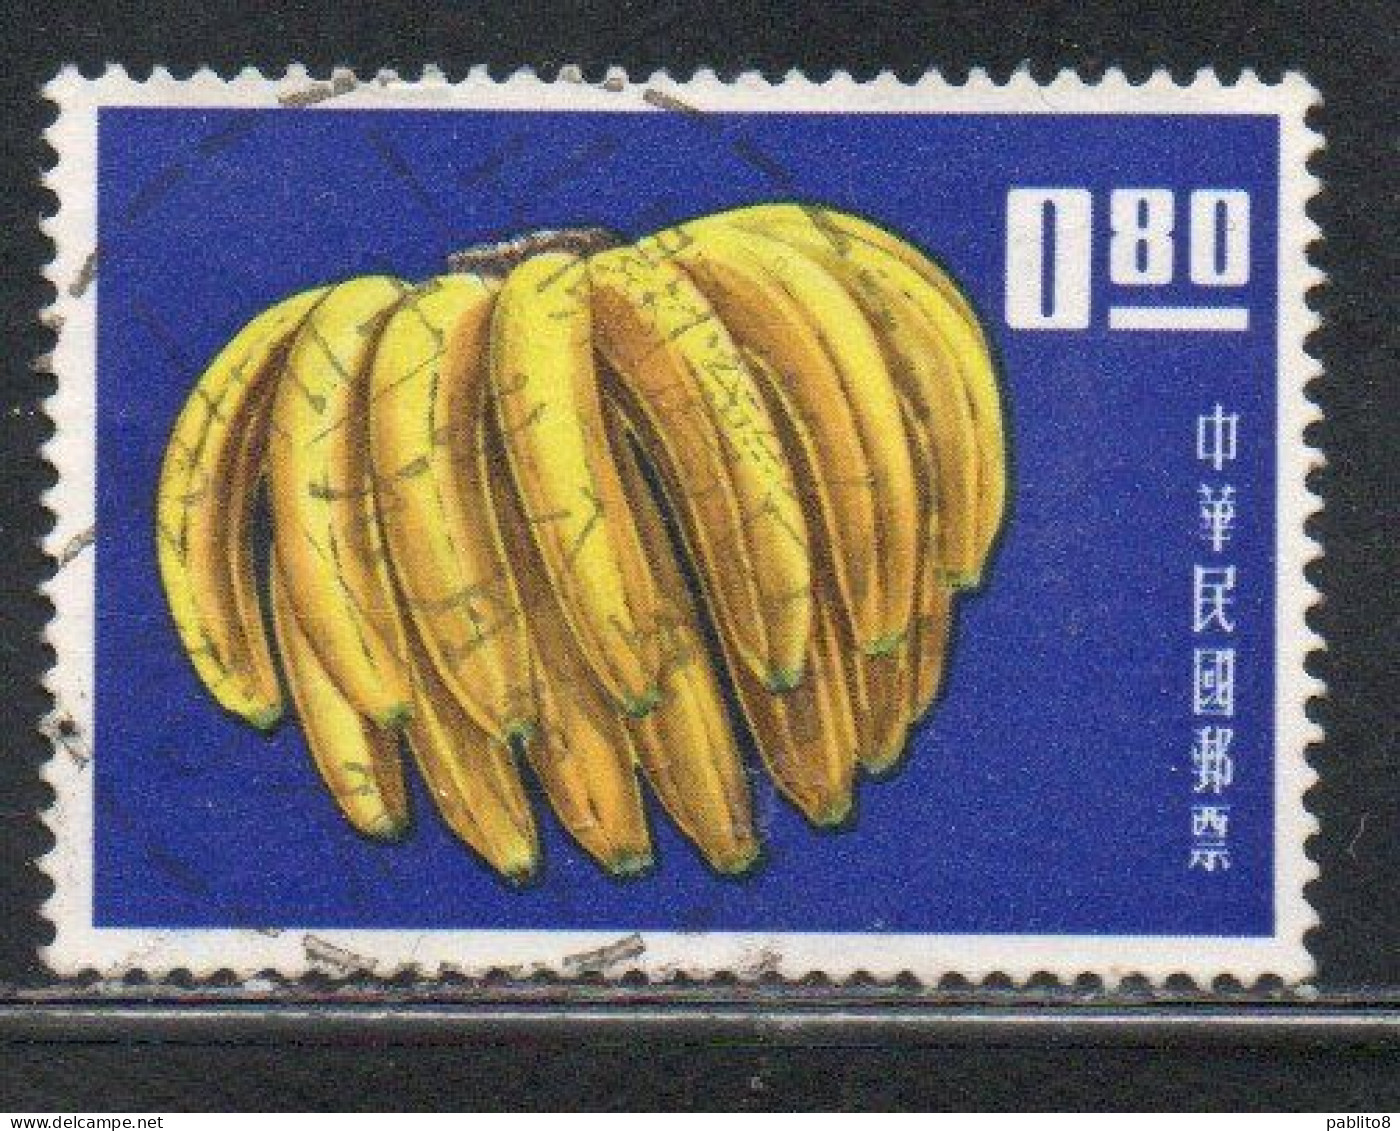 CHINA REPUBLIC CINA TAIWAN FORMOSA 1964 FRUITS BANANAS BANANA FRUIT 80c USED USATO OBLITERE' - Used Stamps